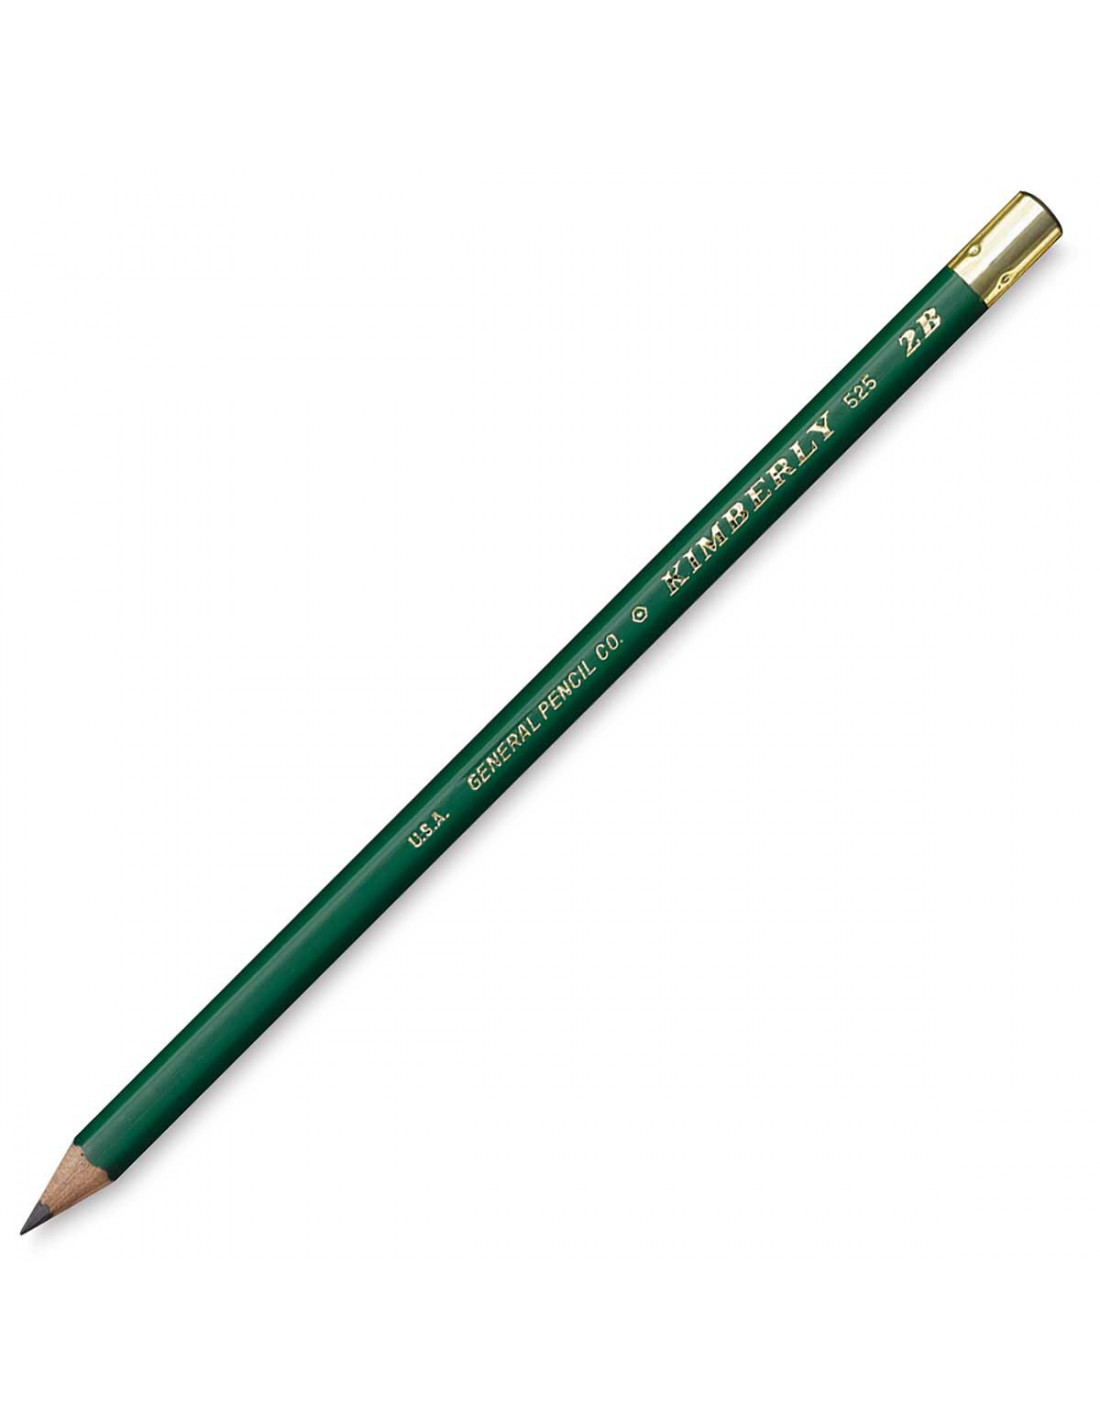 Crayon graphite 2B - Kimberly 525 - General Pencil Company